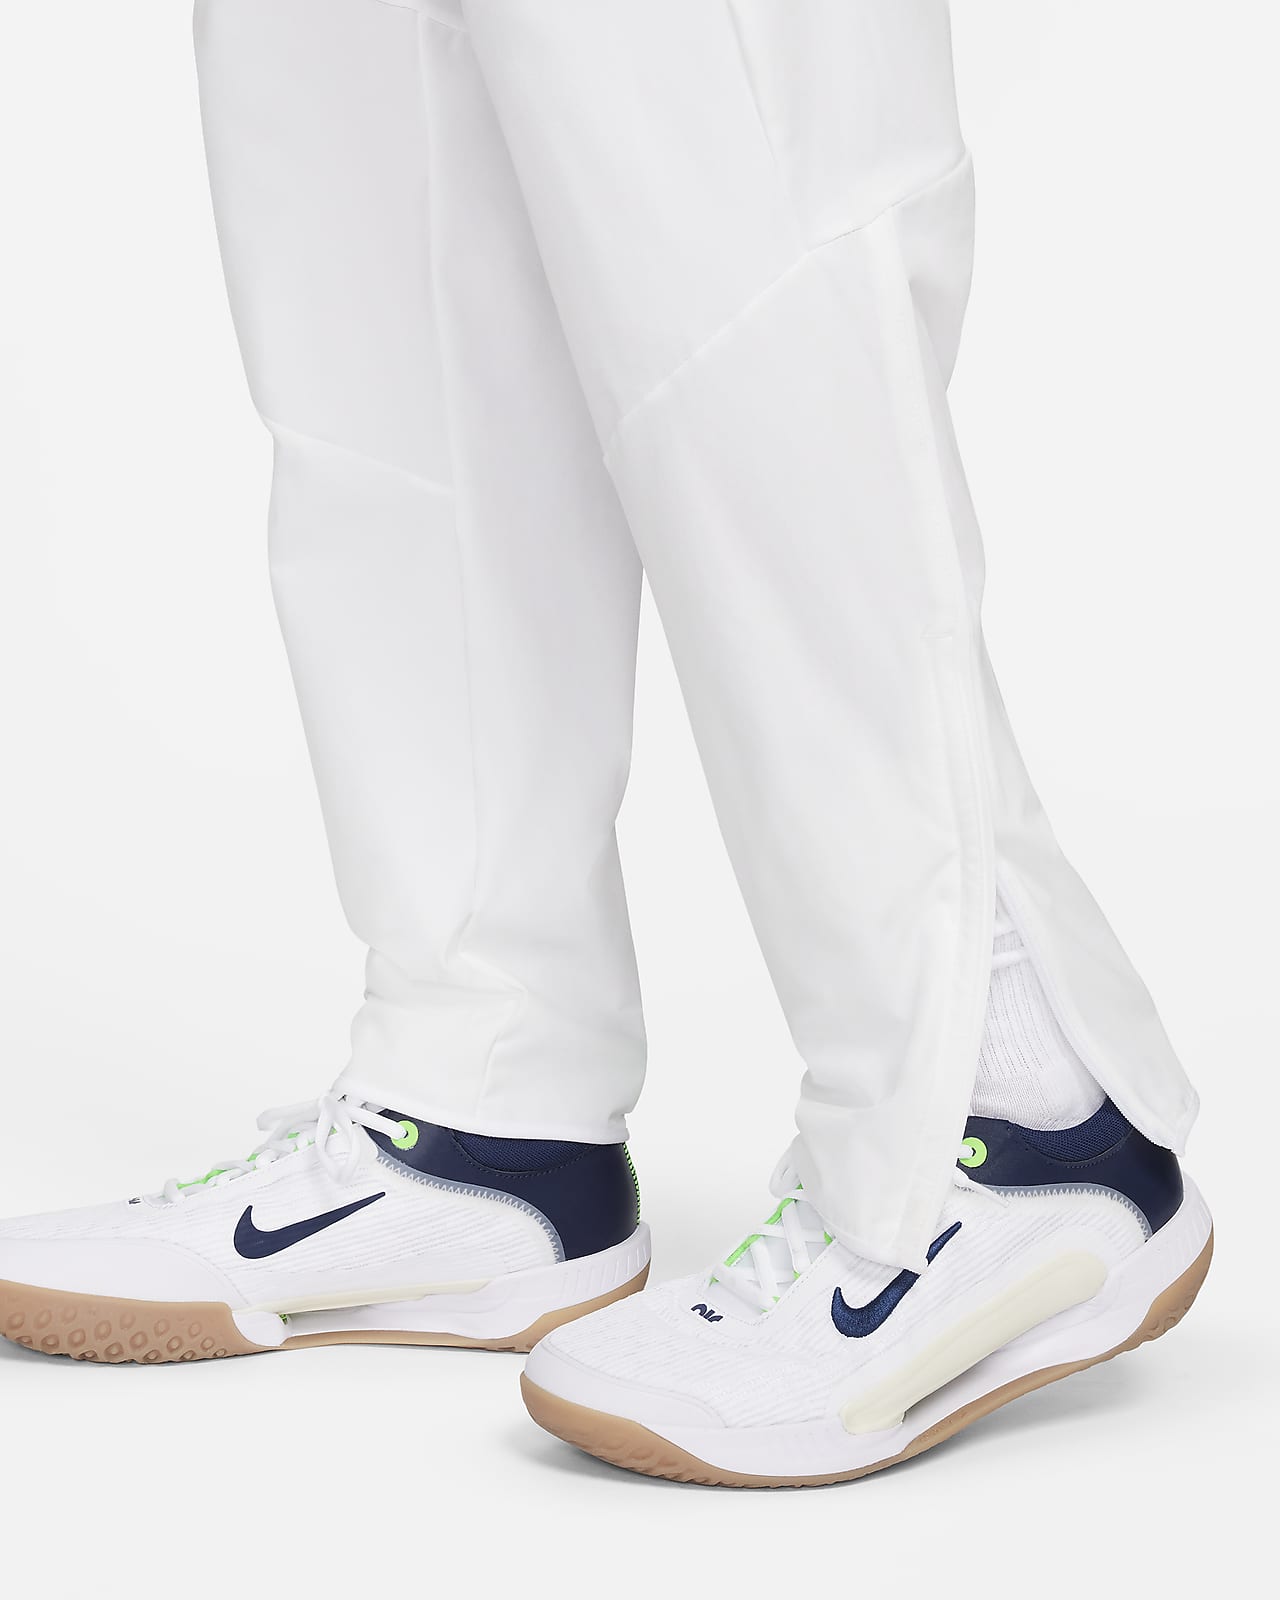 NikeCourt Men's Tennis Trousers. Nike BE